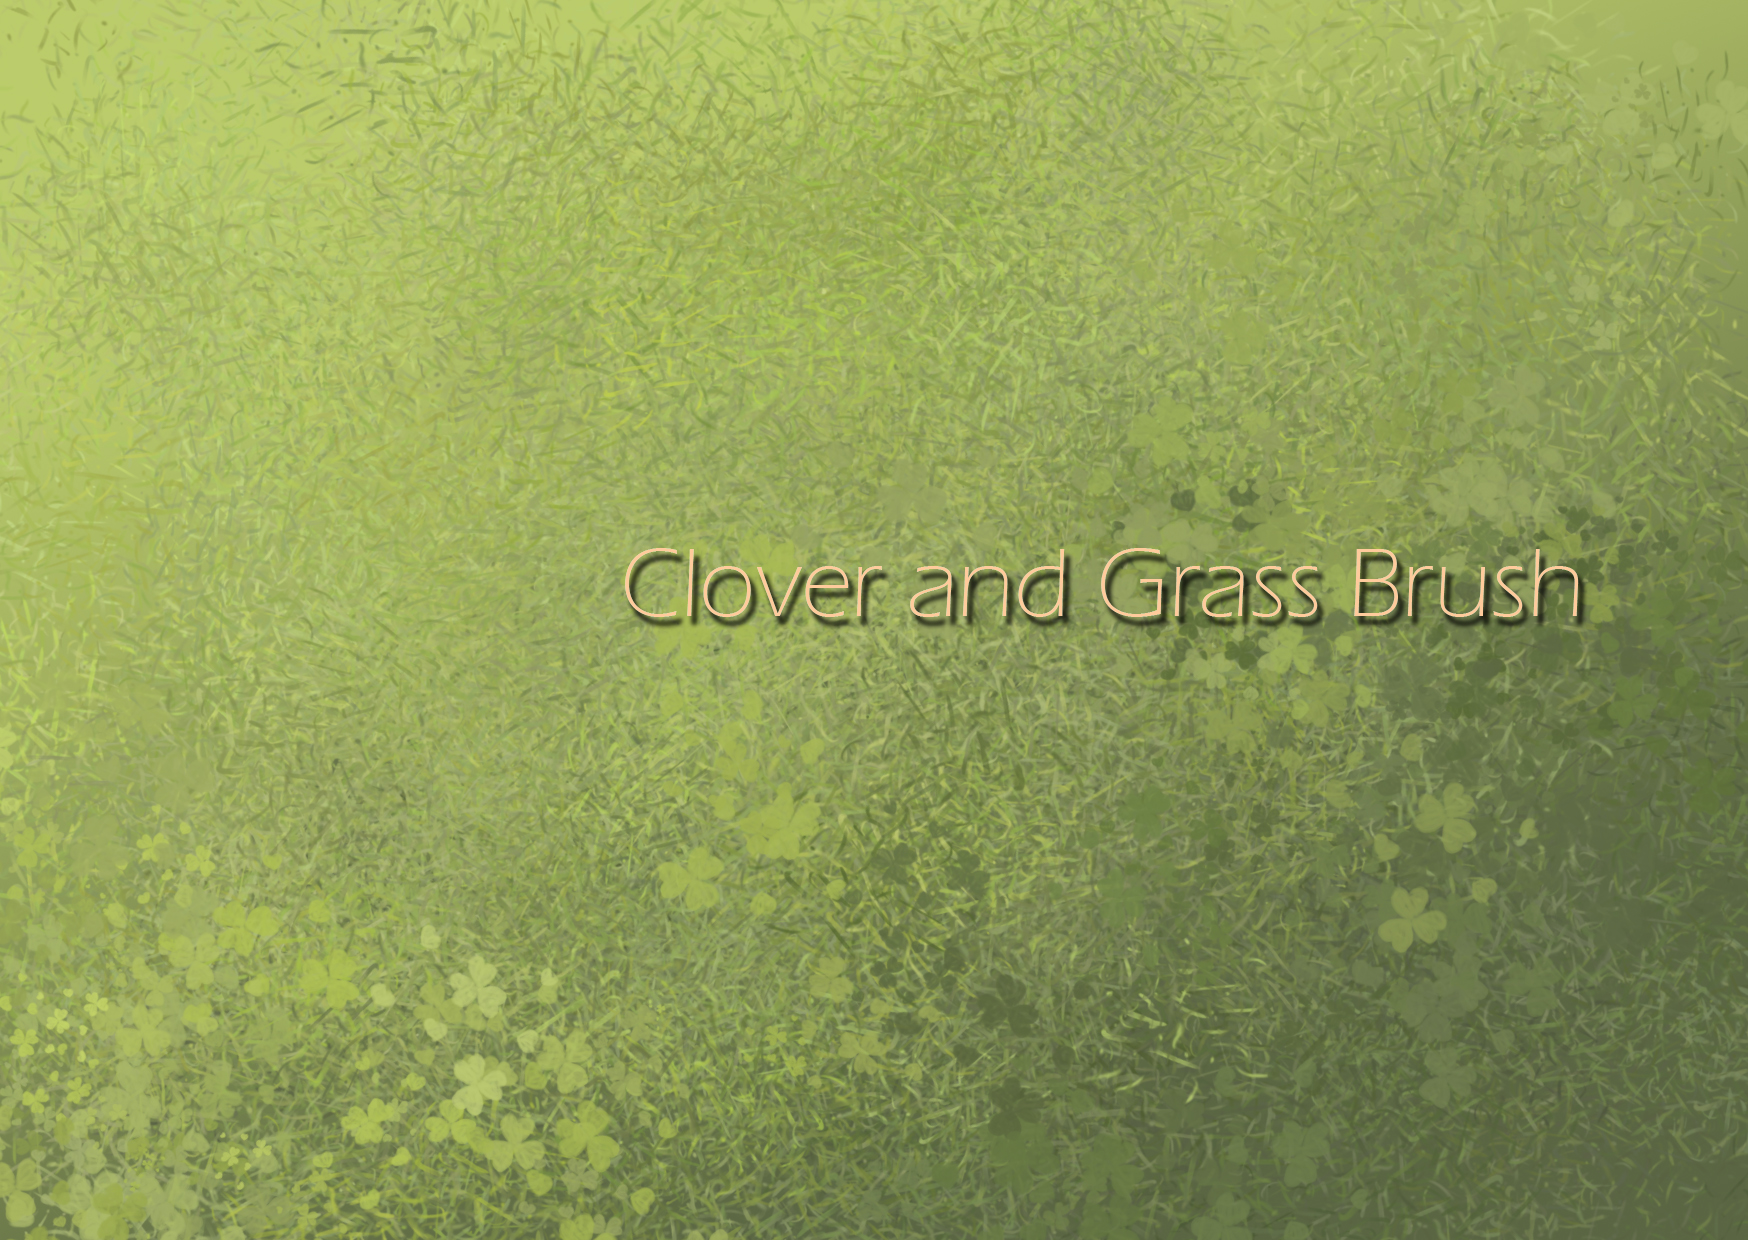 Clover and Grass